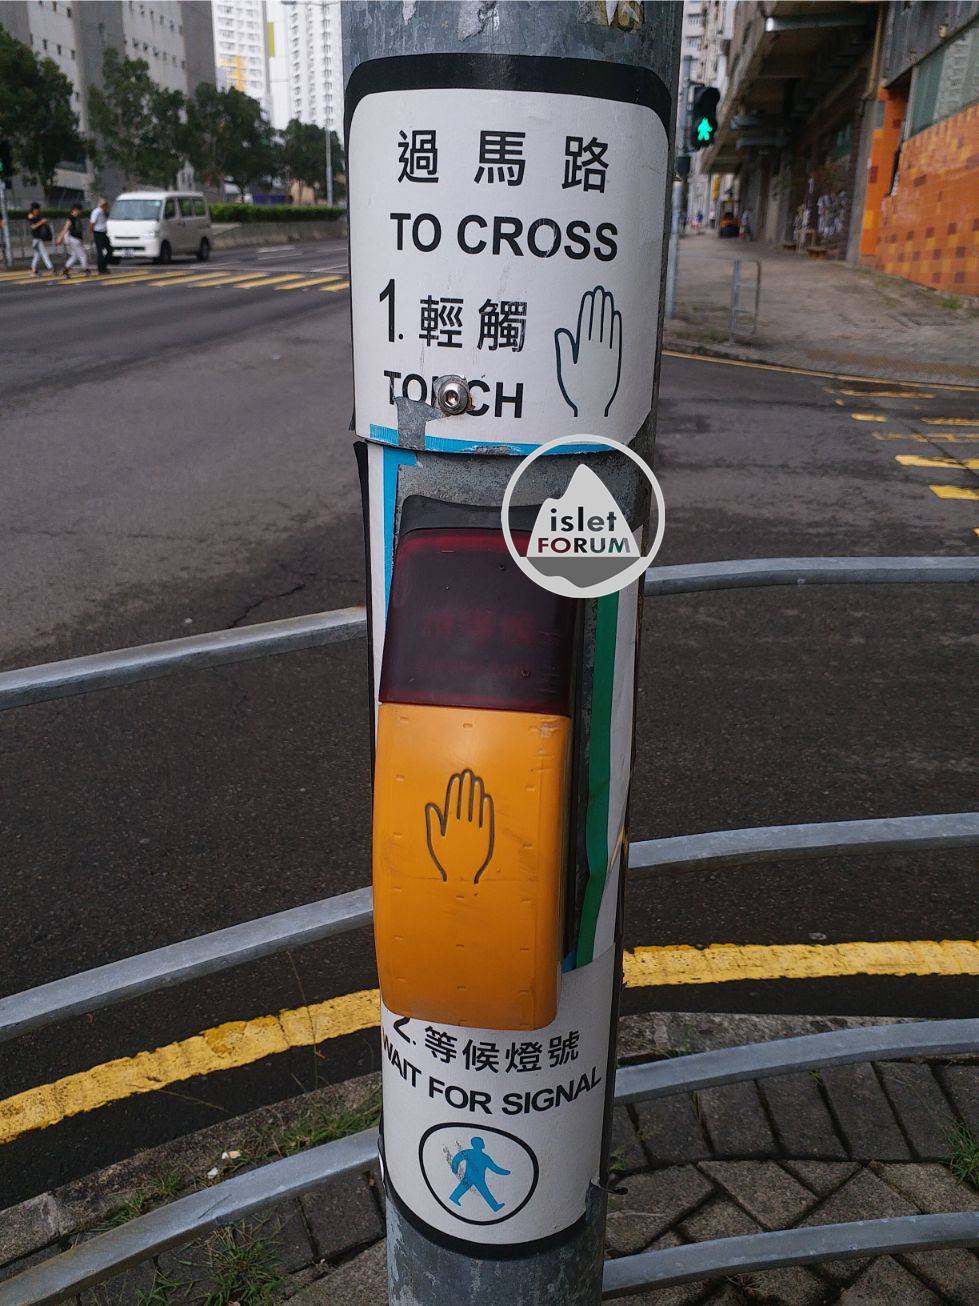 行人觸覺感應器  (2)Touch Sensors for Pedestrians.jpg